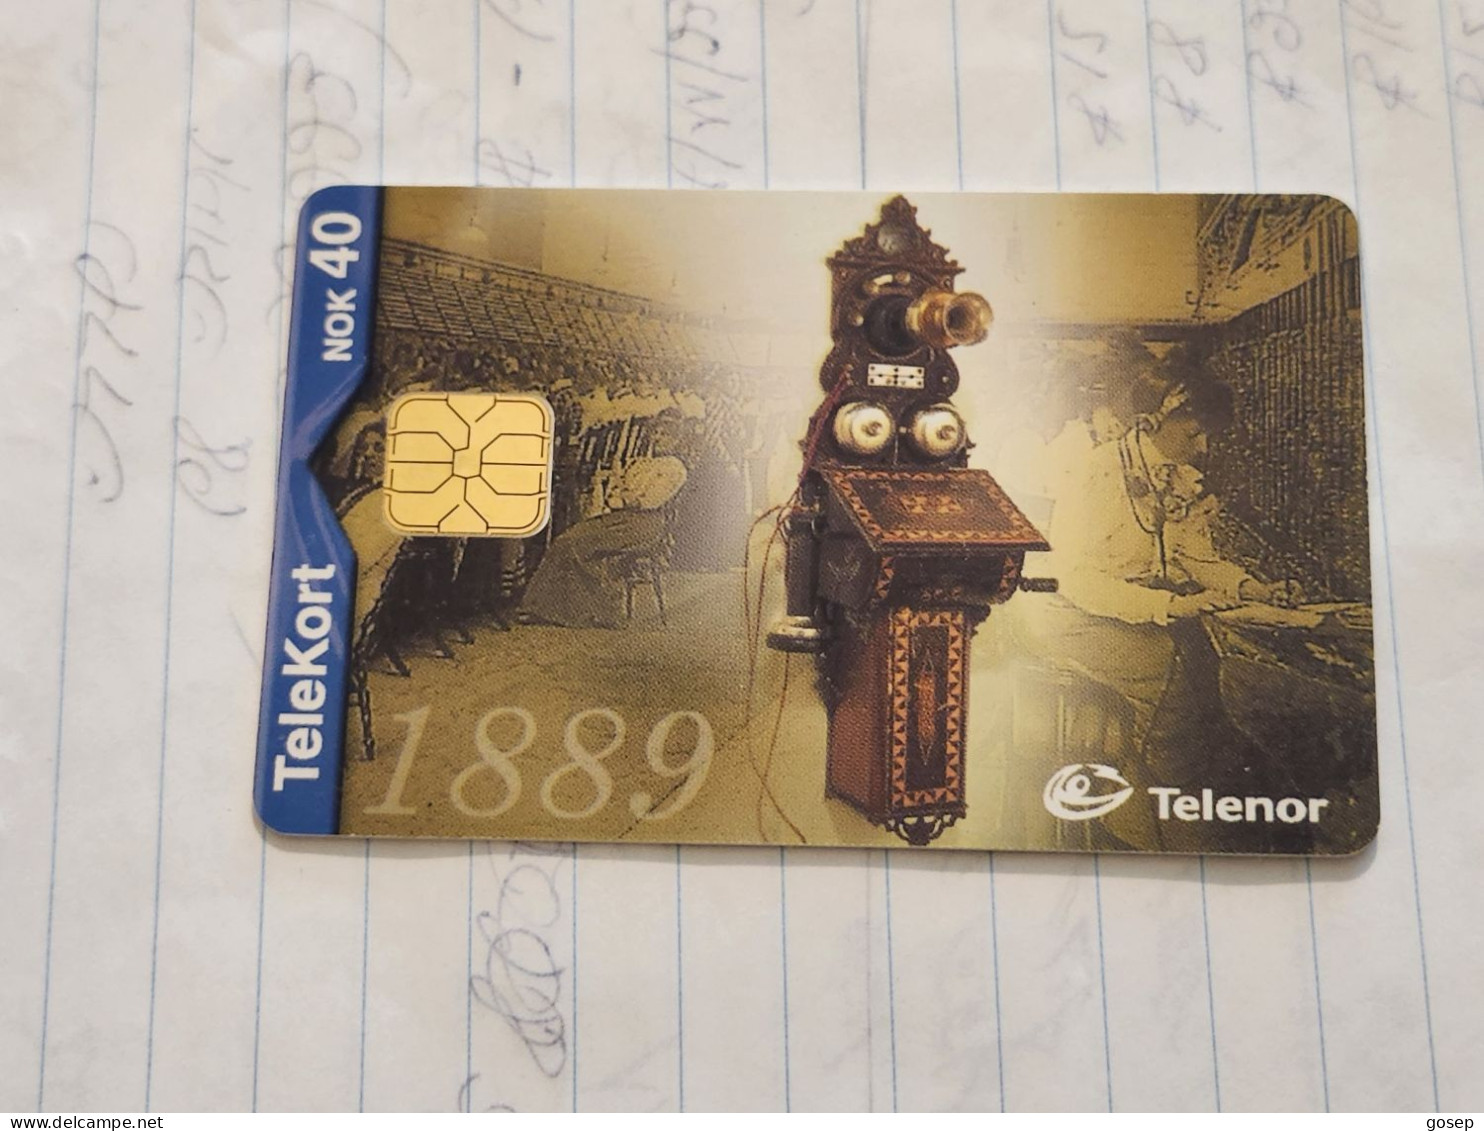 Norway-(N-166)-Telefon 1889-(KR 40)-(75)-(1.02.2000)-used Card+1card Prepiad Free - Noruega